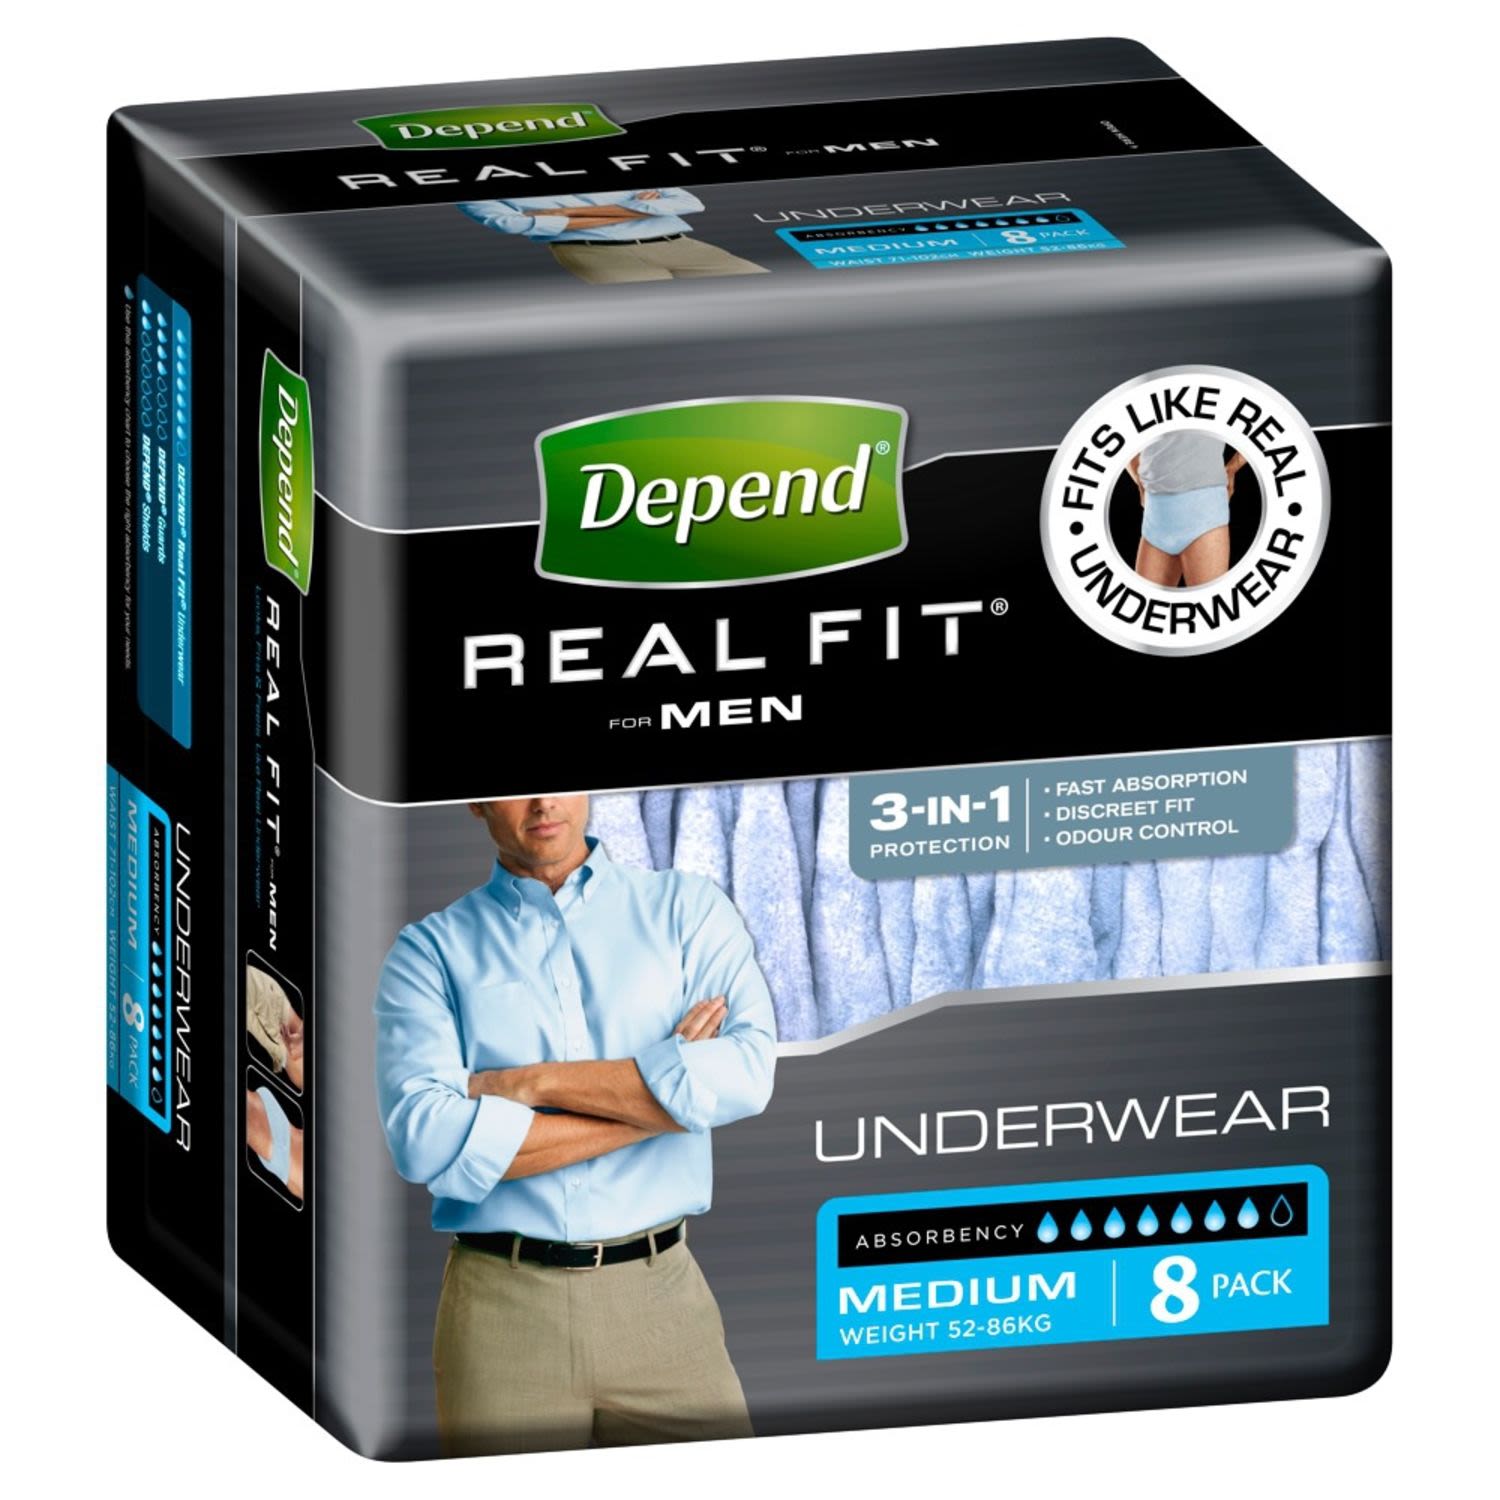 Depend Real Fit For Men's Underwear Medium, 8 Each